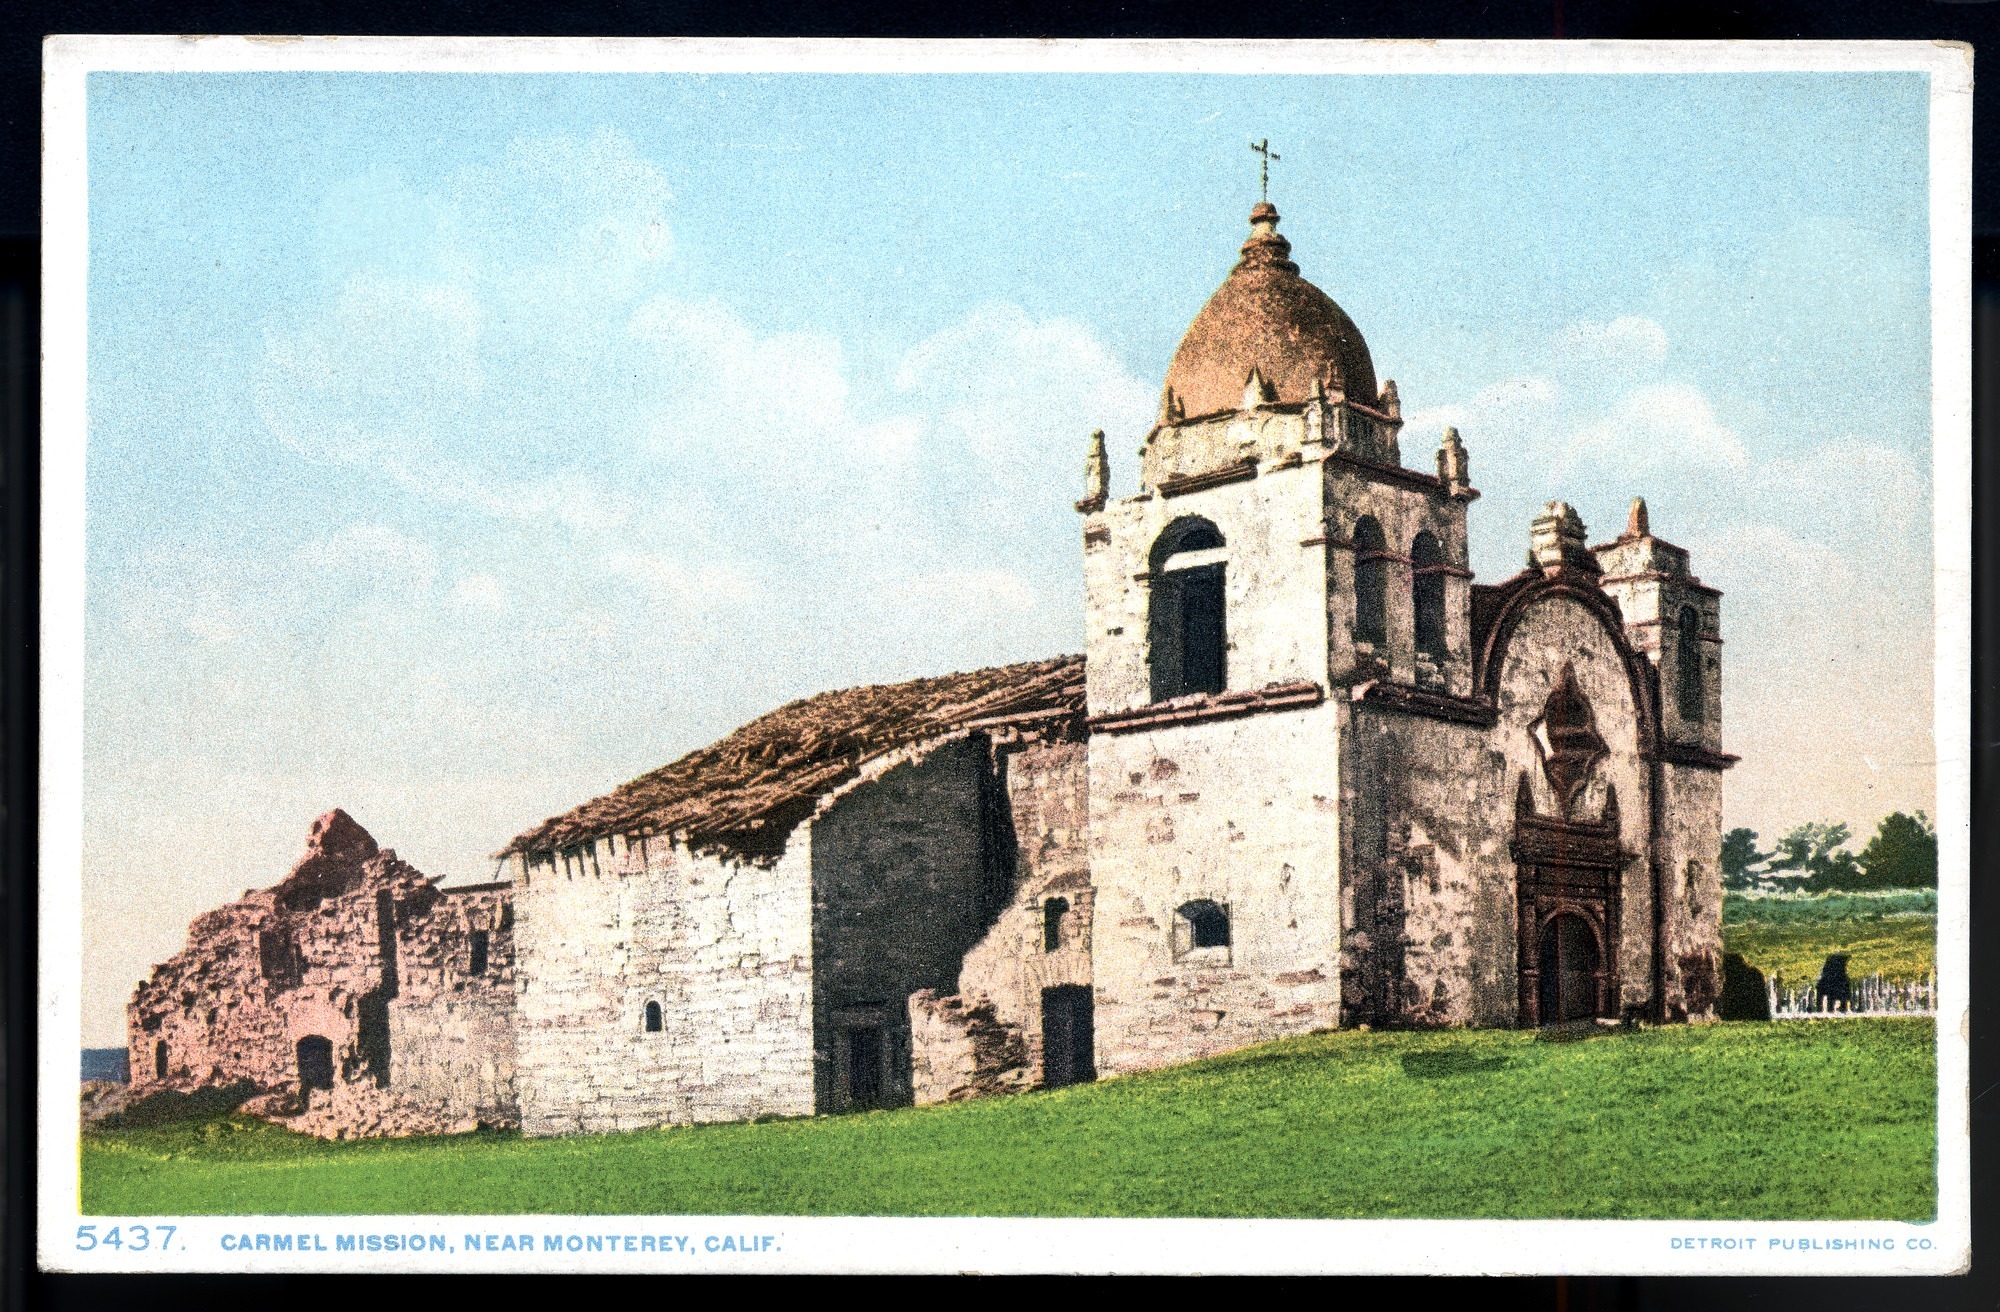 Postcard 05 – Carmel Mission, Near Monterey, Calif. Detroit Publishing Company. ca 1910. NMAH 1986.0639.2014.